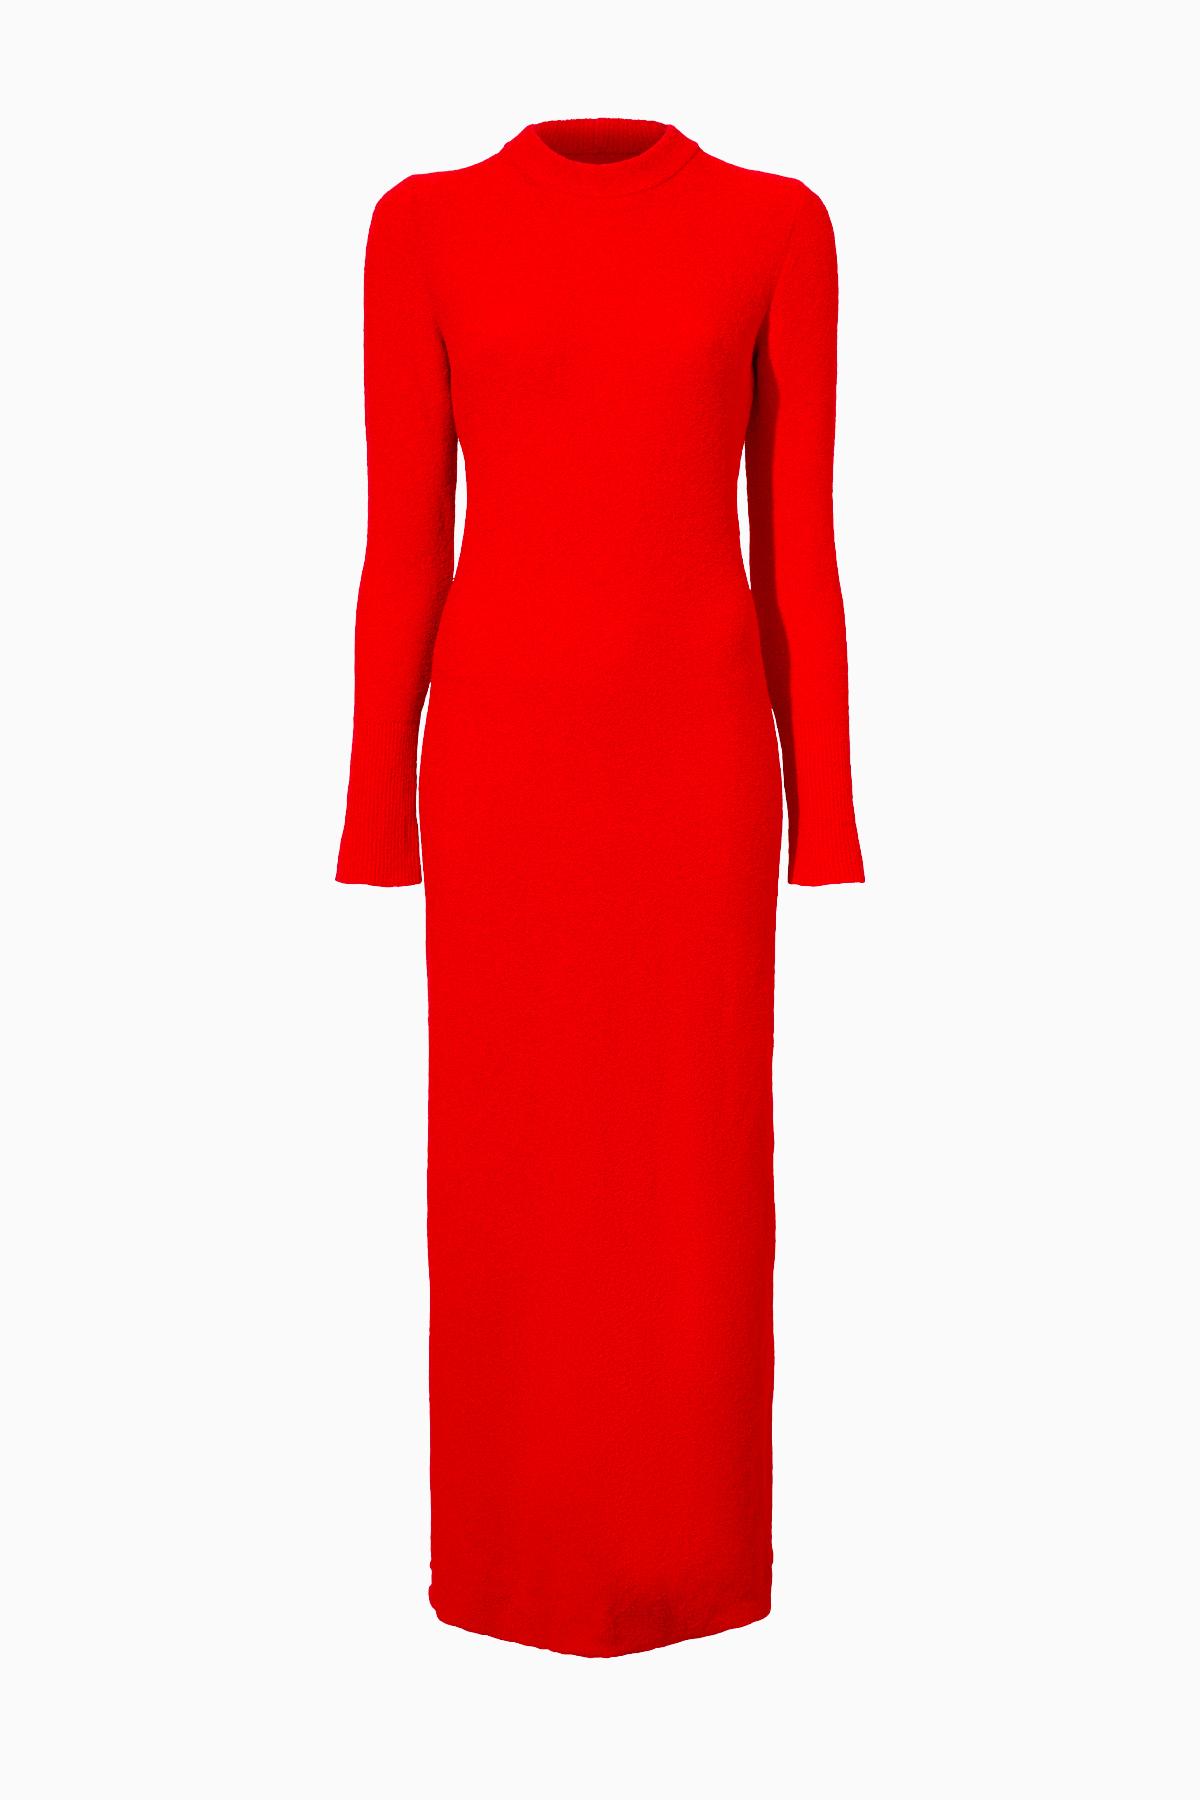 Proenza Schouler Lara Boucle Knit Dress - Red